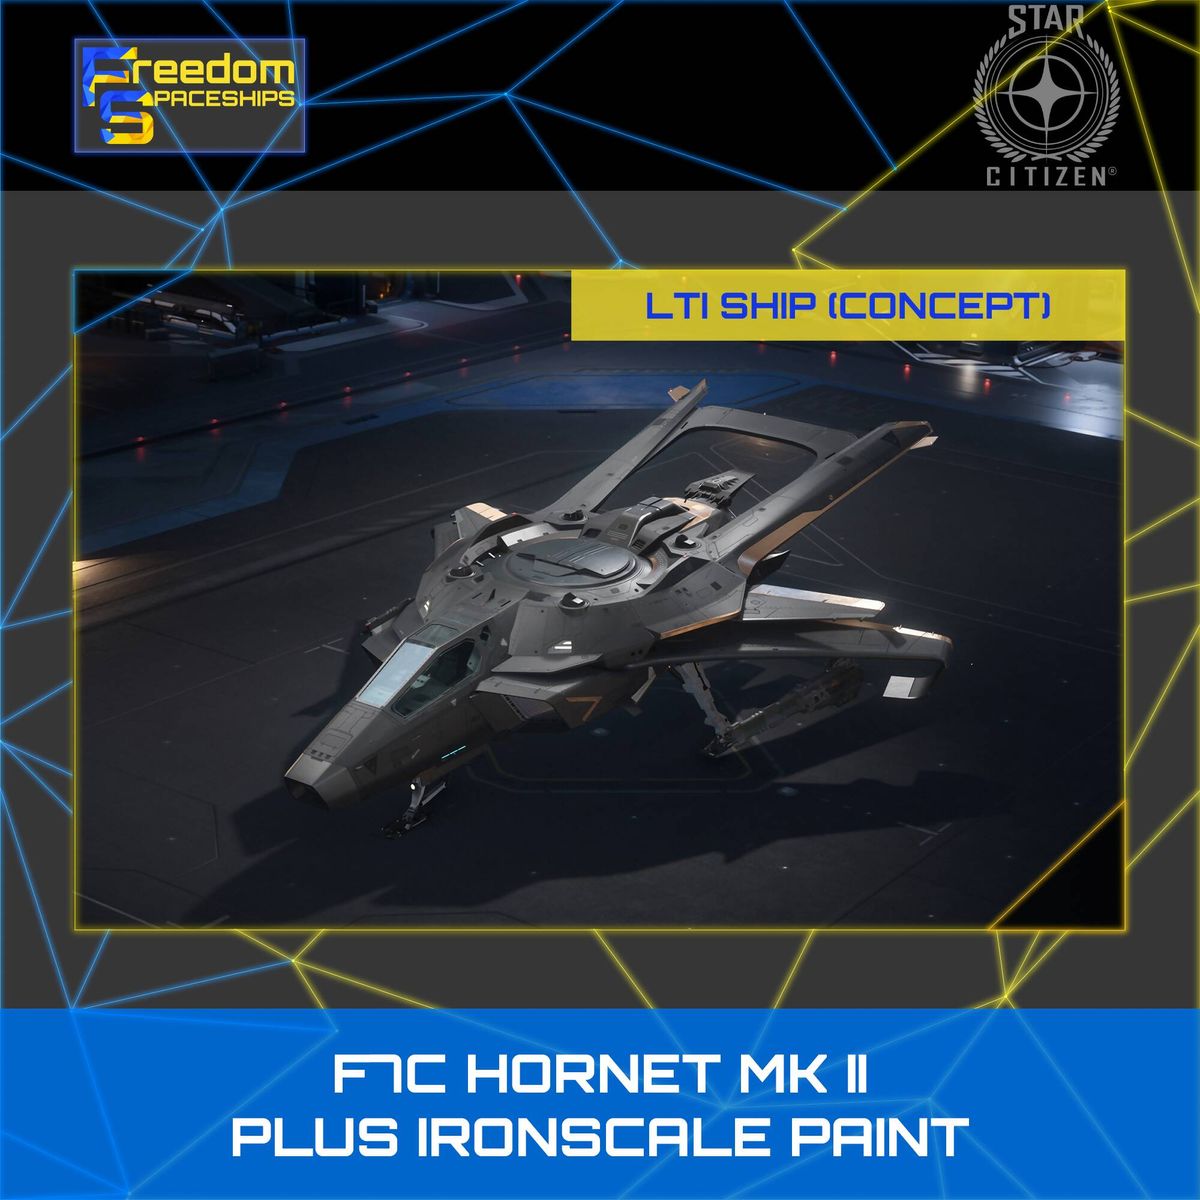 F7C Hornet MK II plus Ironscale paint